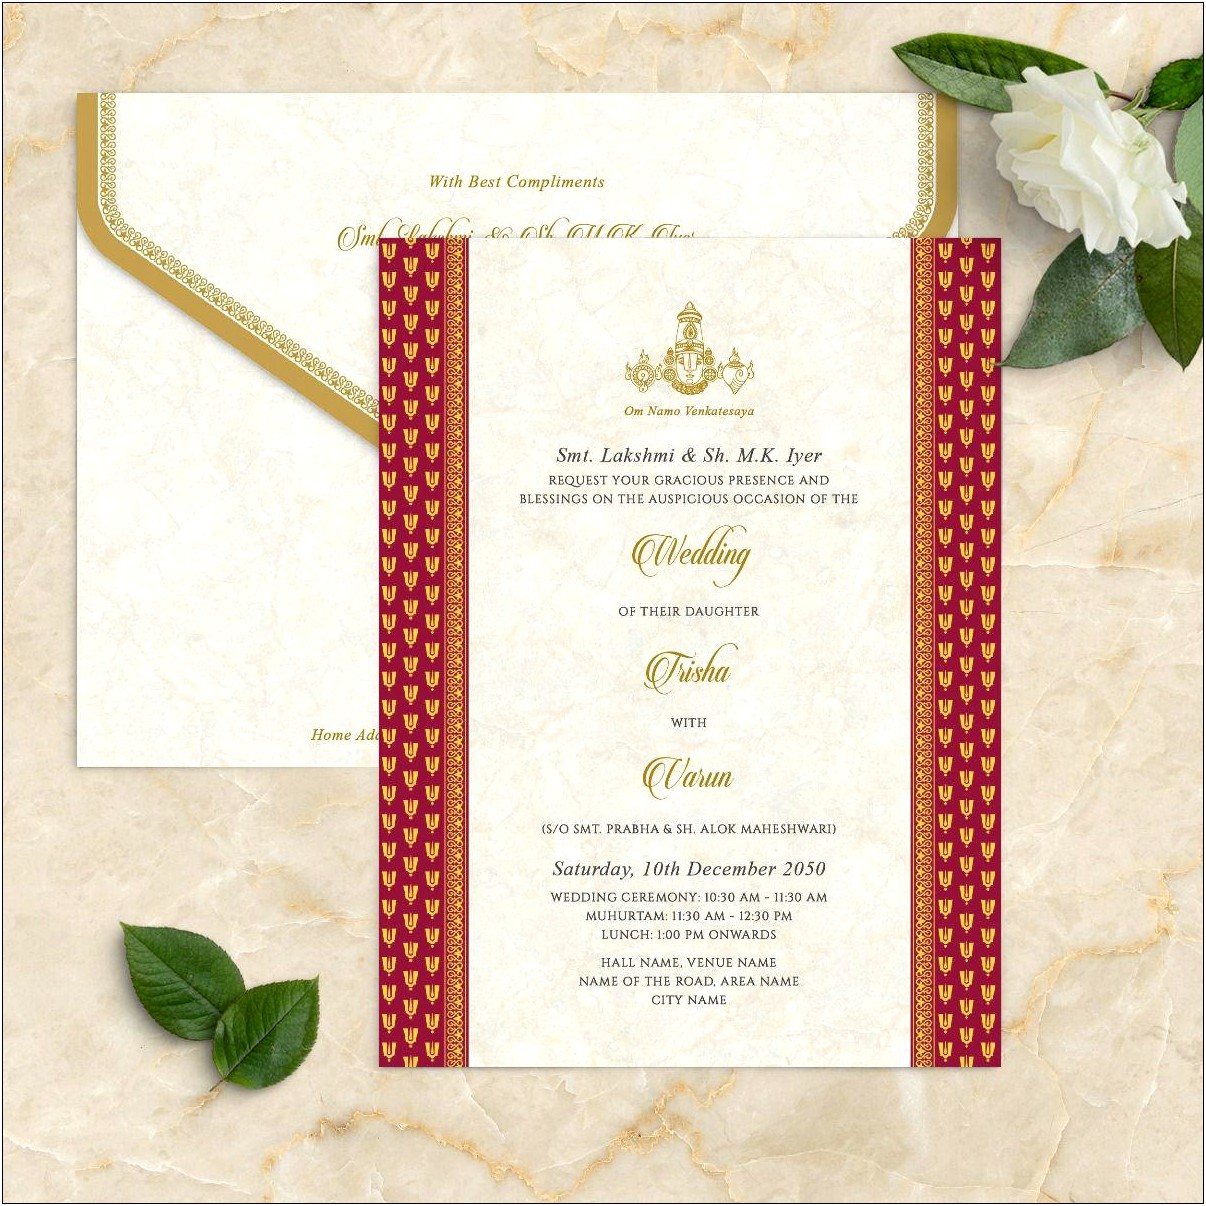 E Invitation Card For Indian Wedding